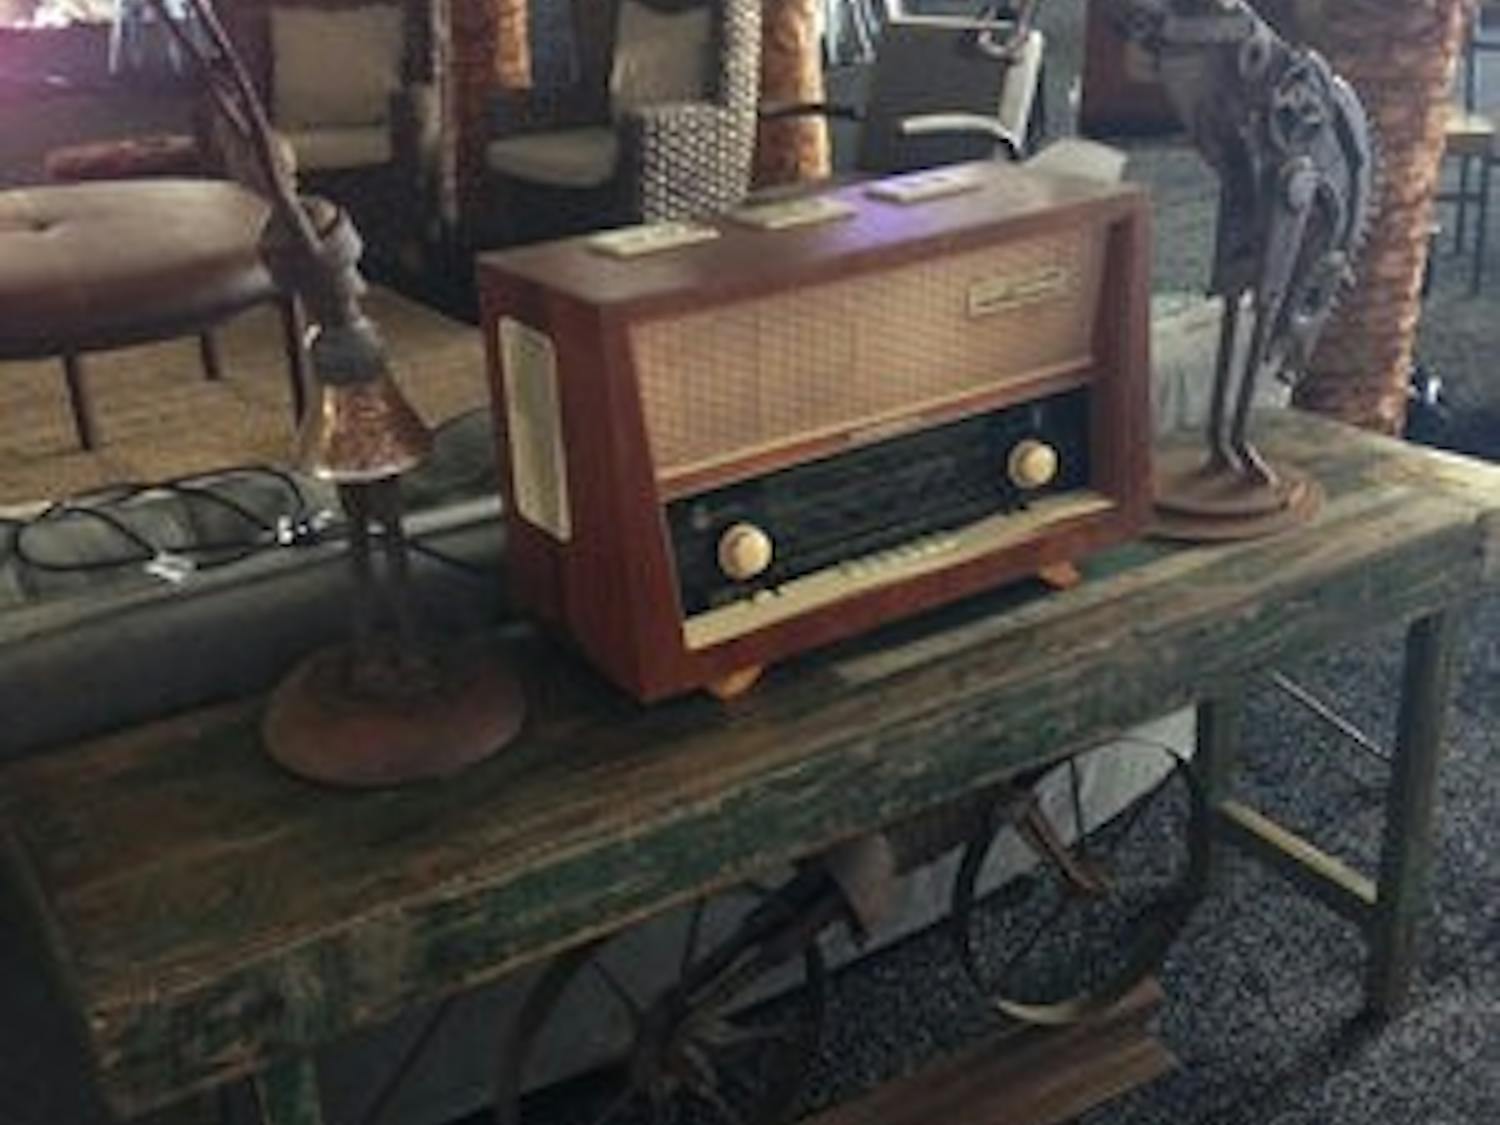 Vintage radio-hangout